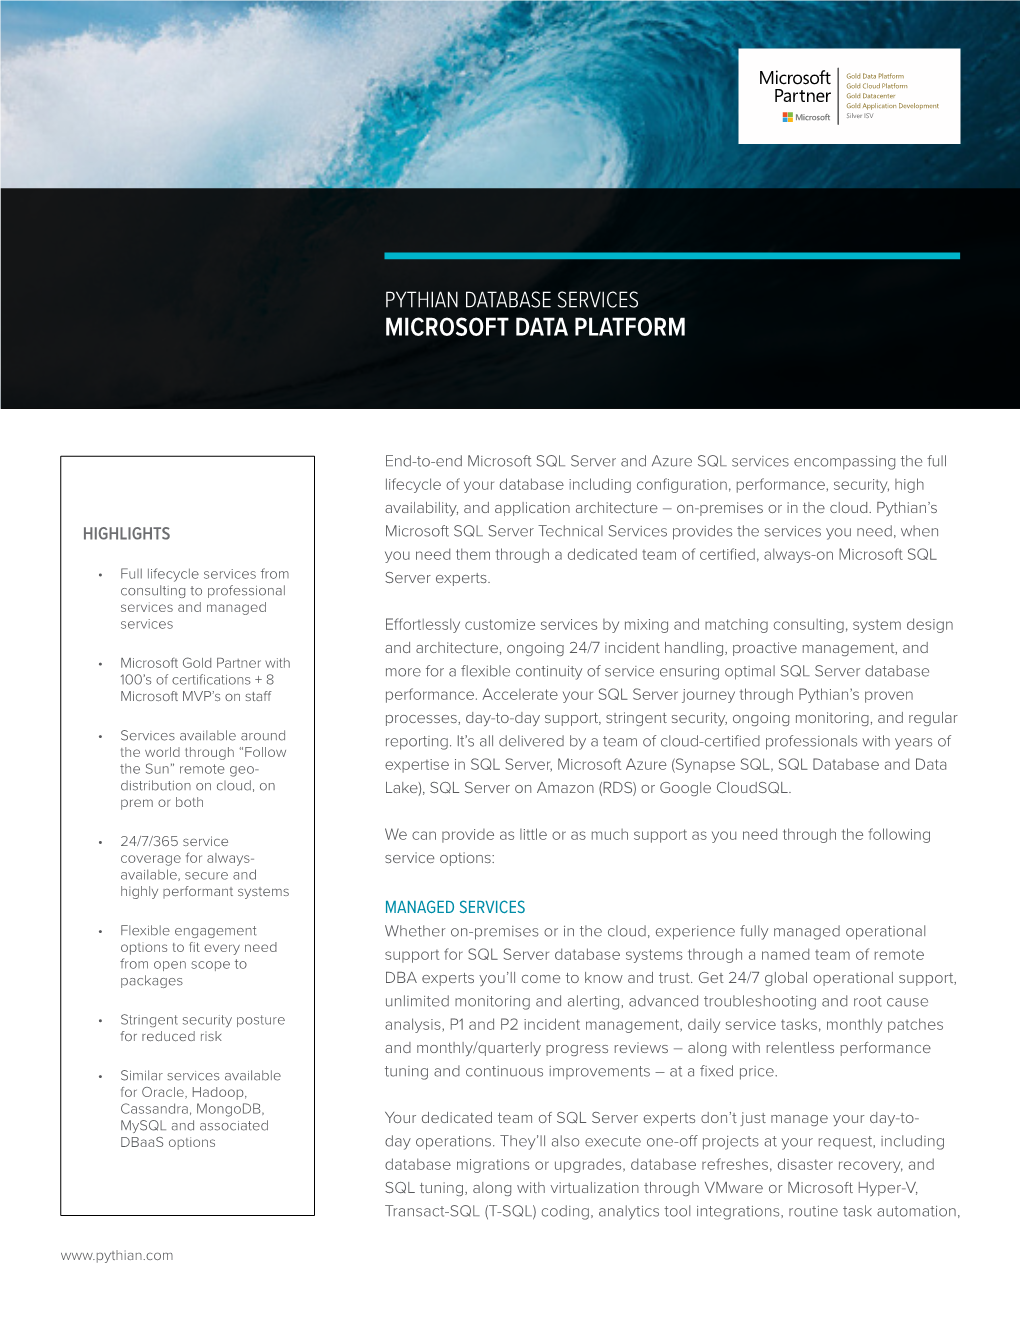 Microsoft Data Platform